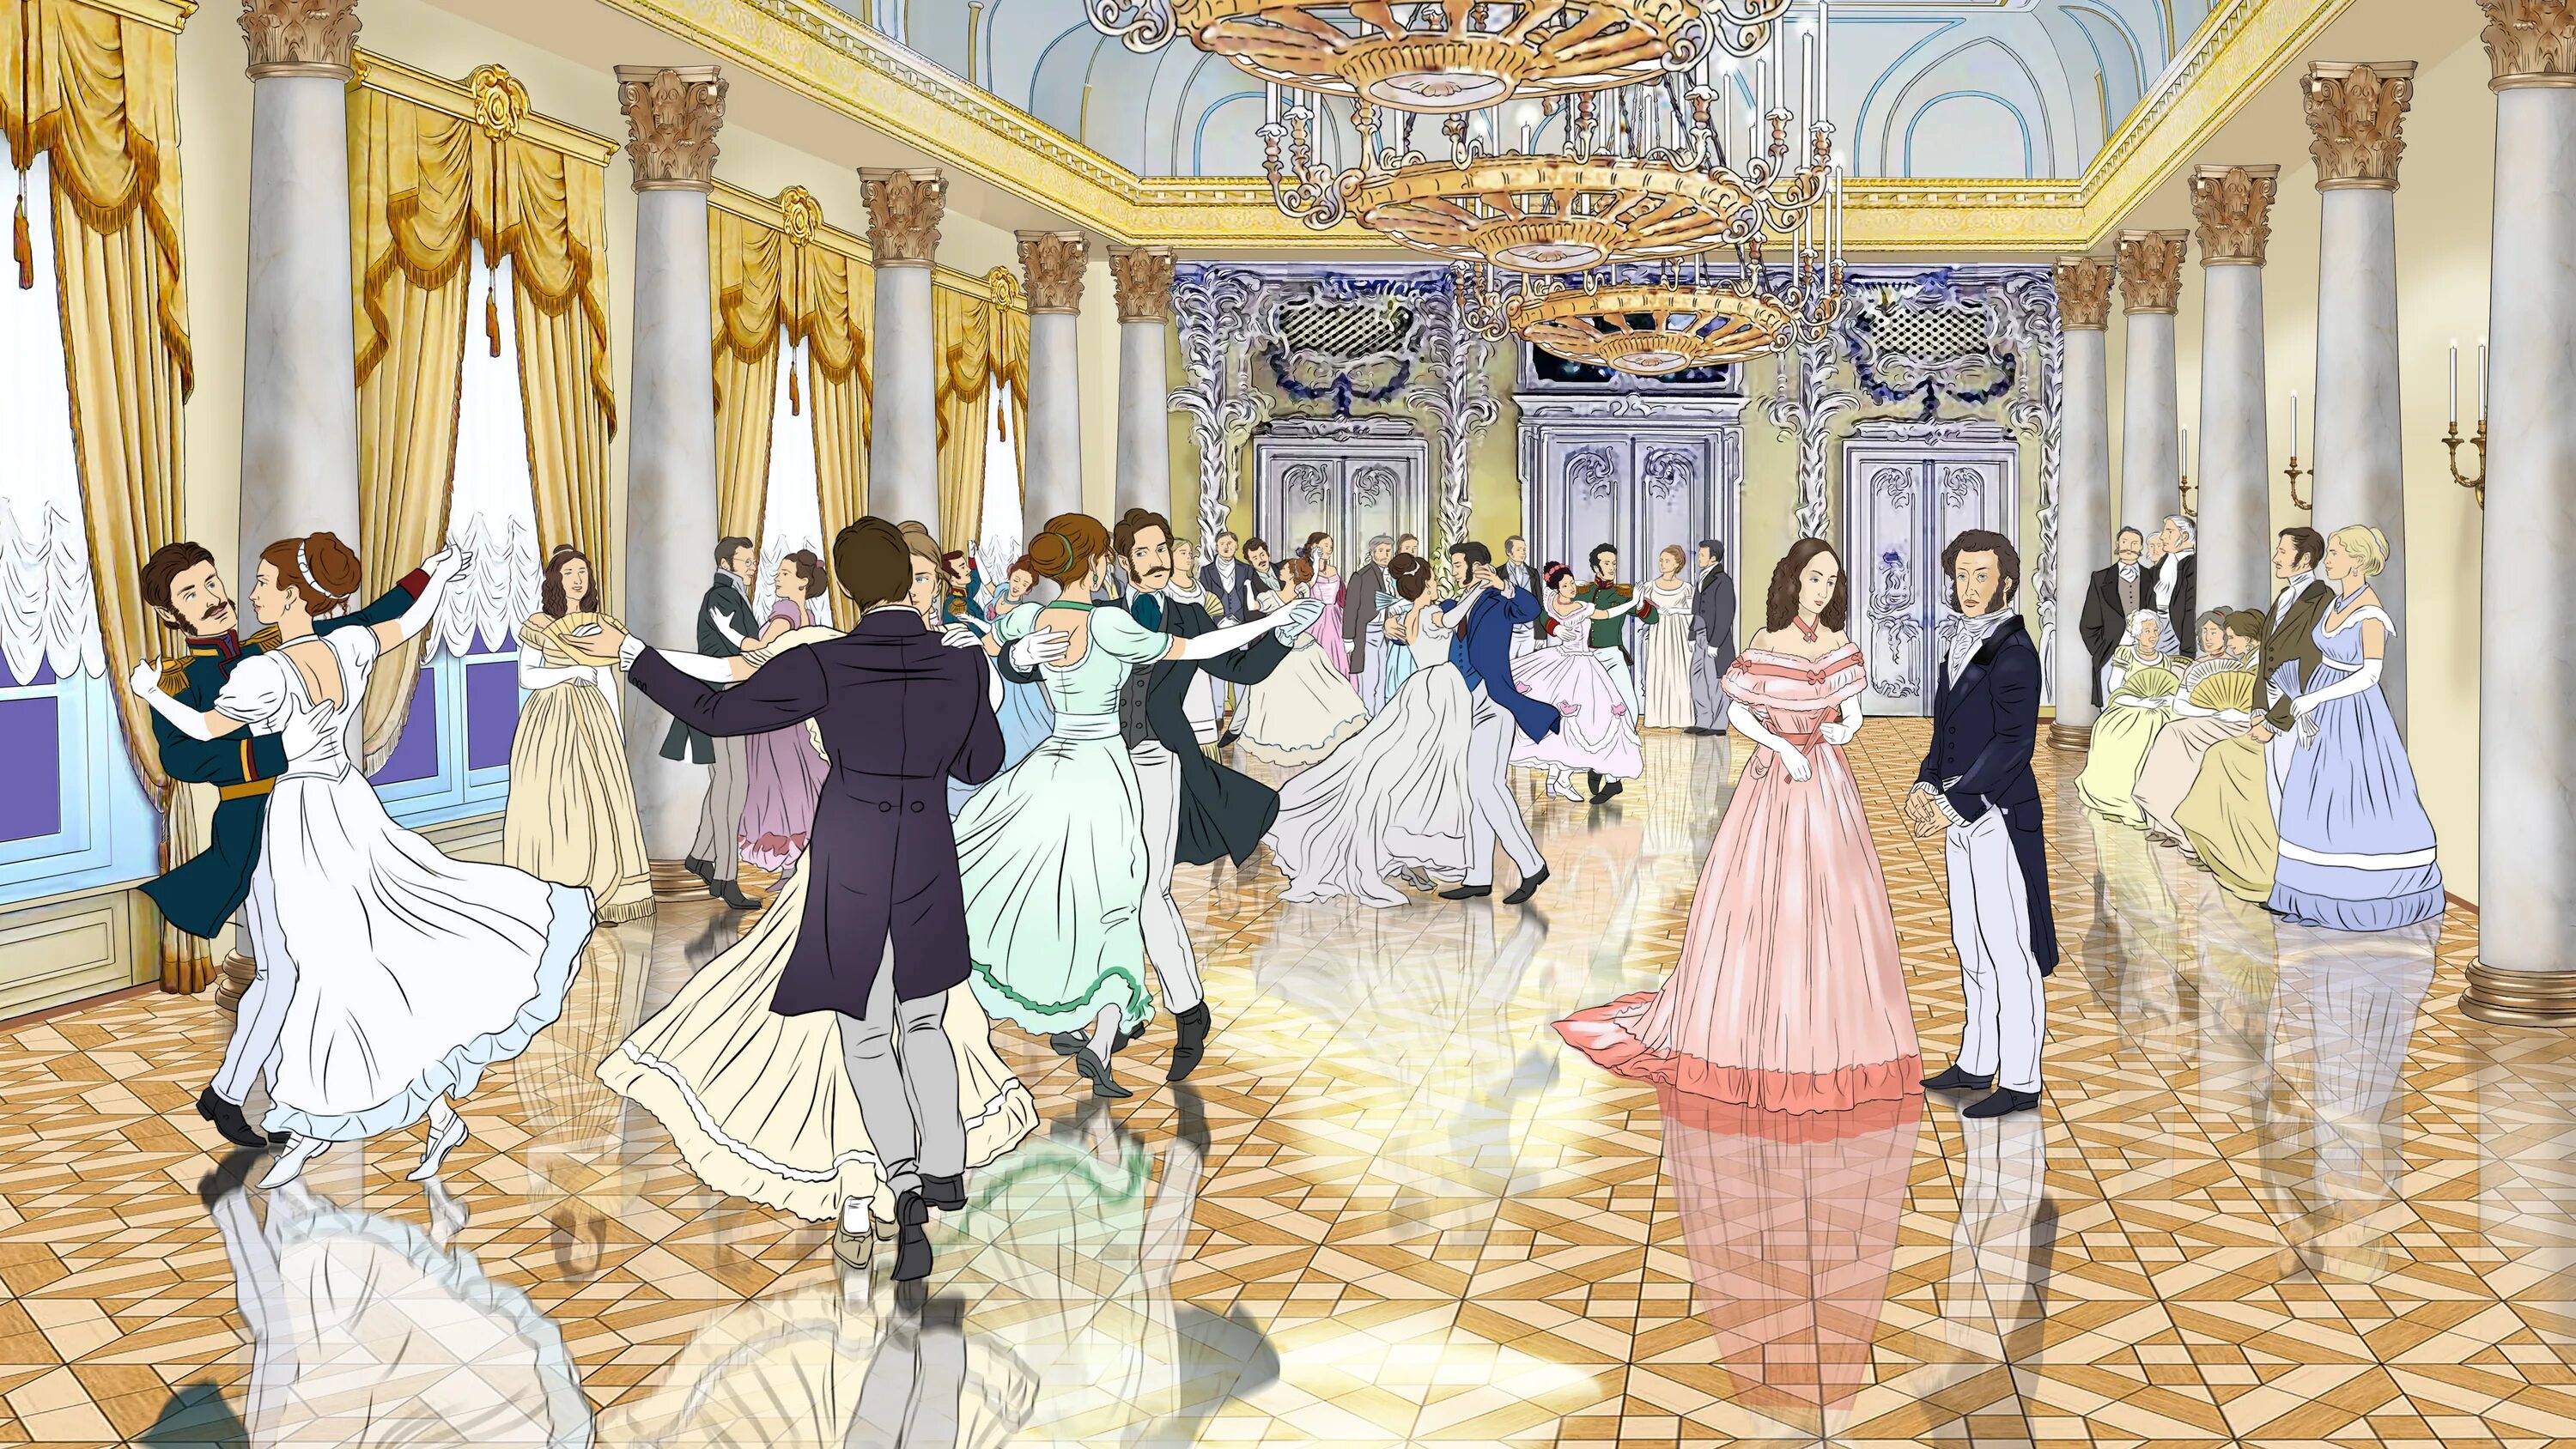 Пушкинский бал 19 век. Бал во Дворце. Еще раз перечитайте эпизод бал